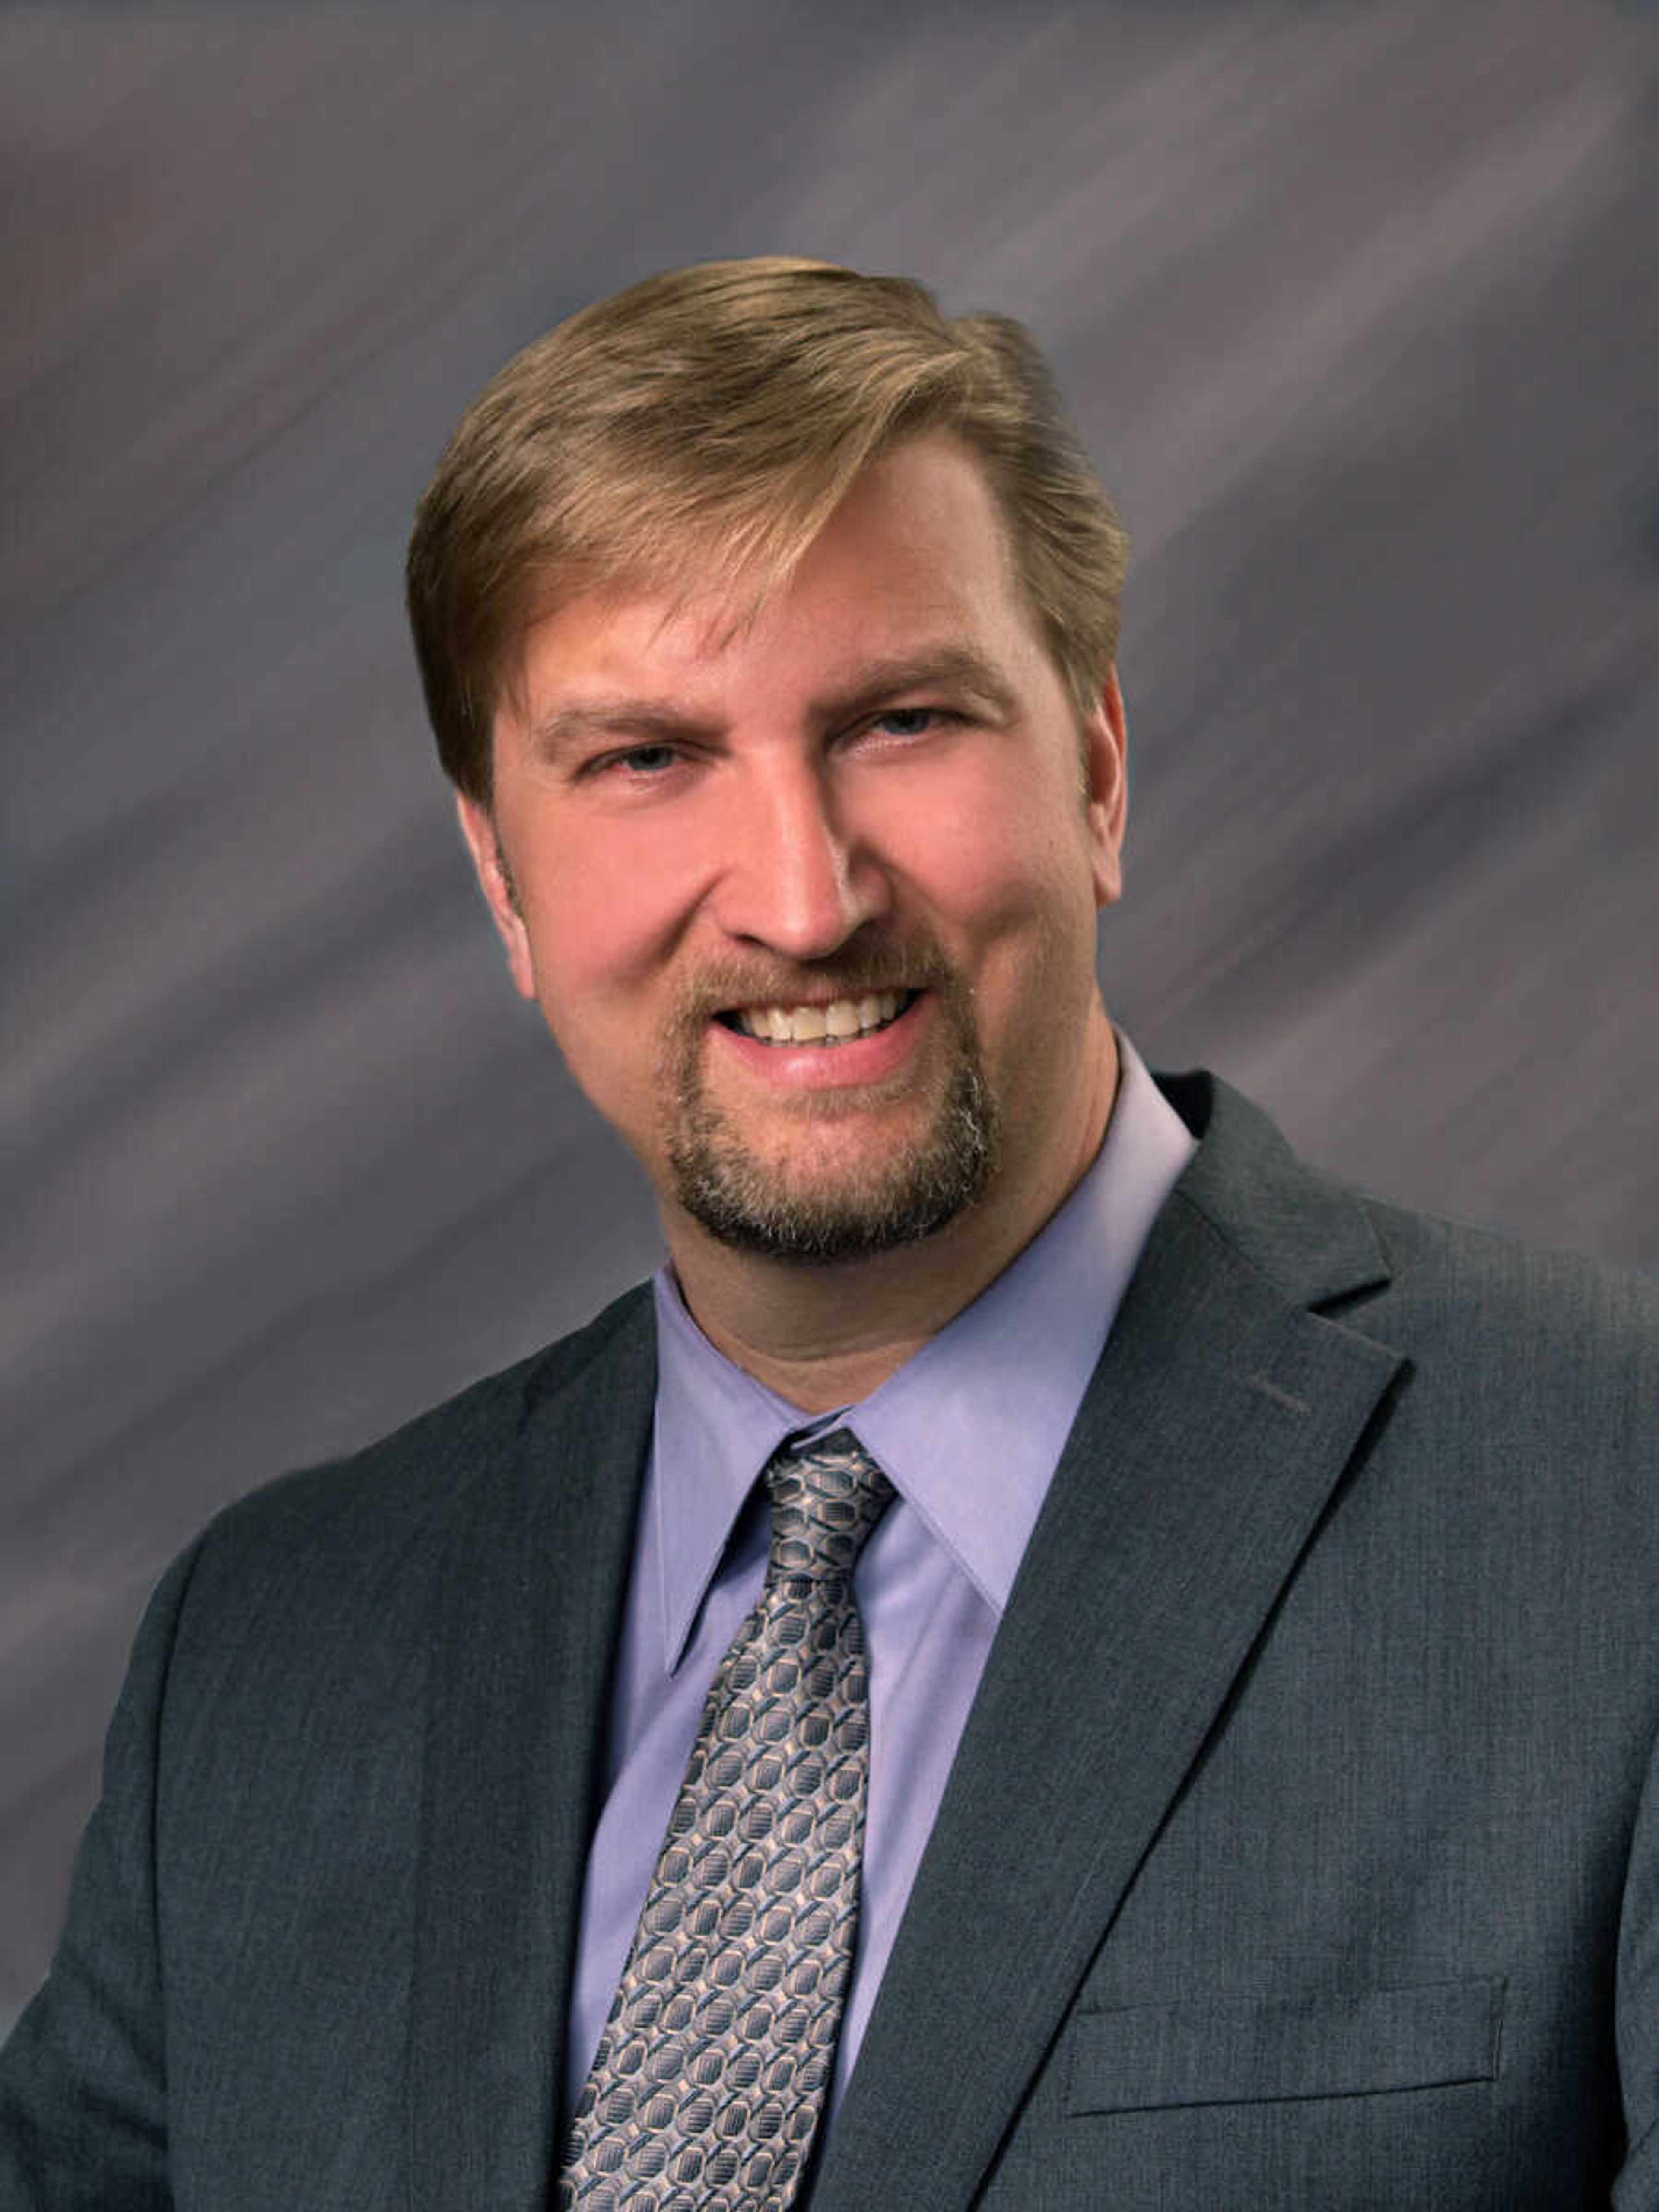 Scott Meyer, Chief Executive Officer of Cape Girardeau, MO